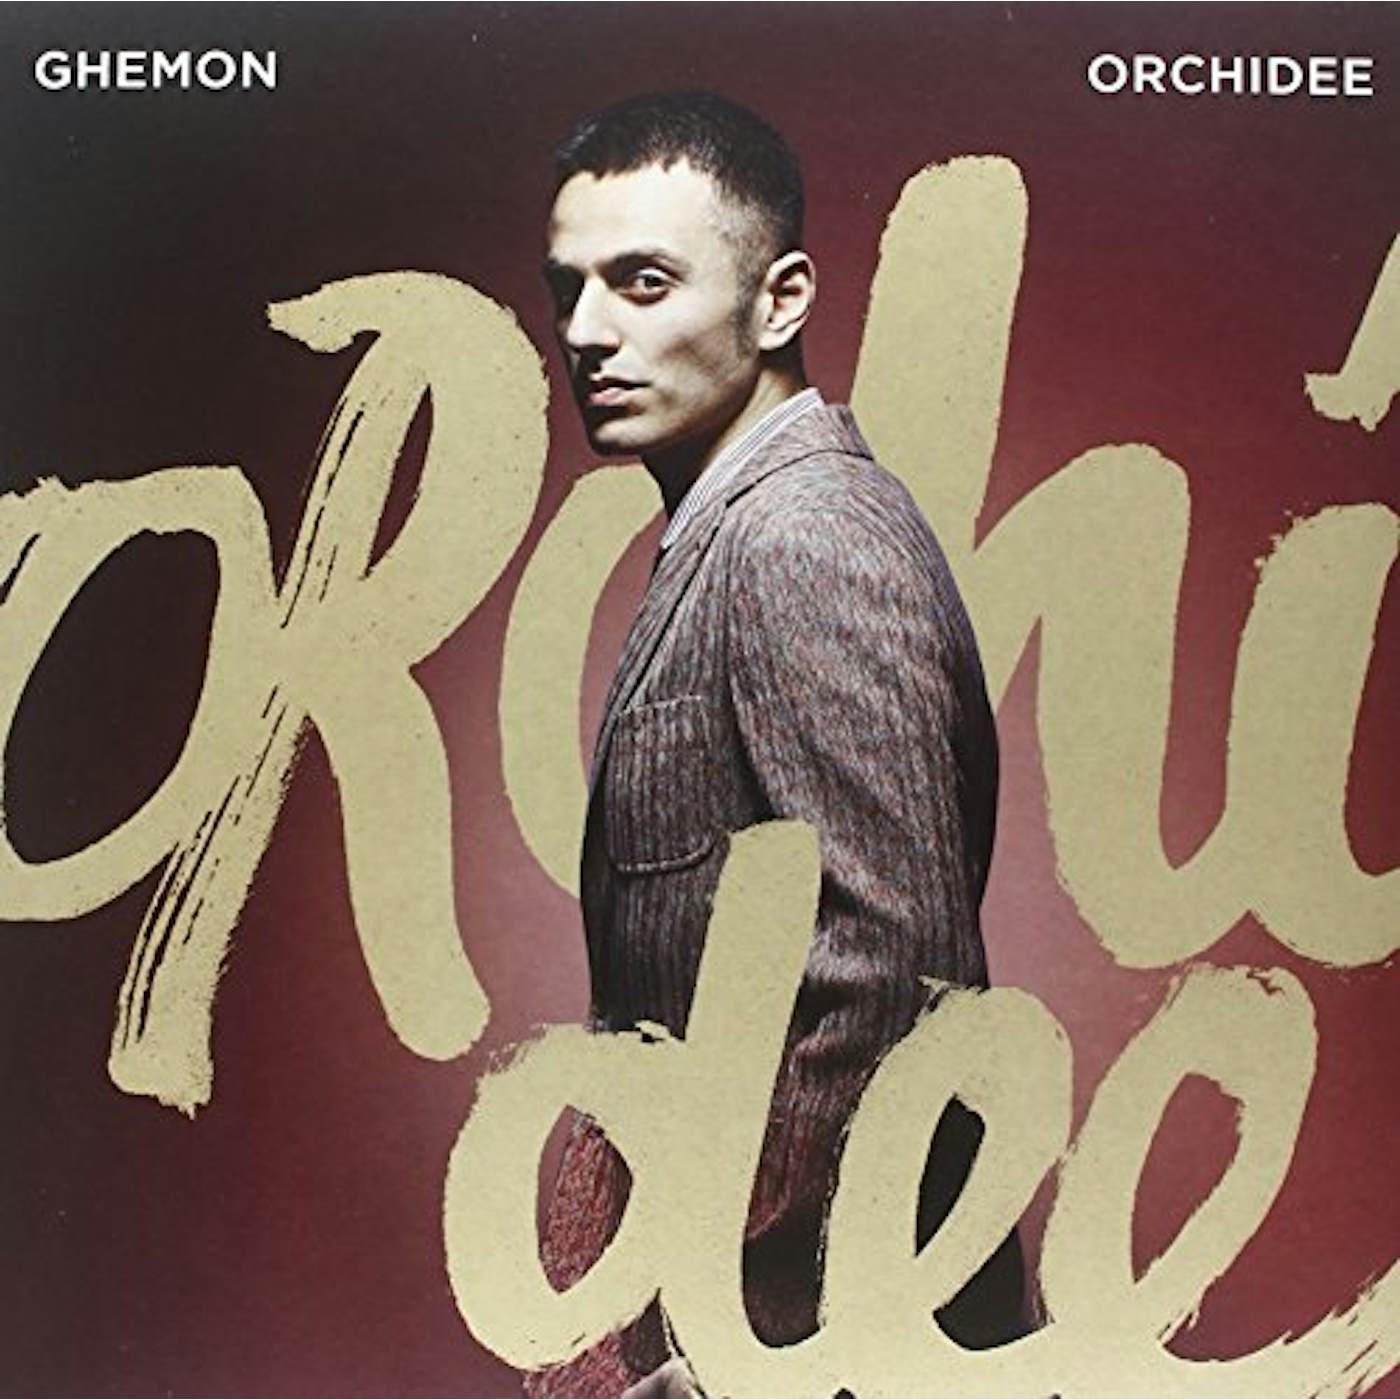 Ghemon ORCHIdee Vinyl Record